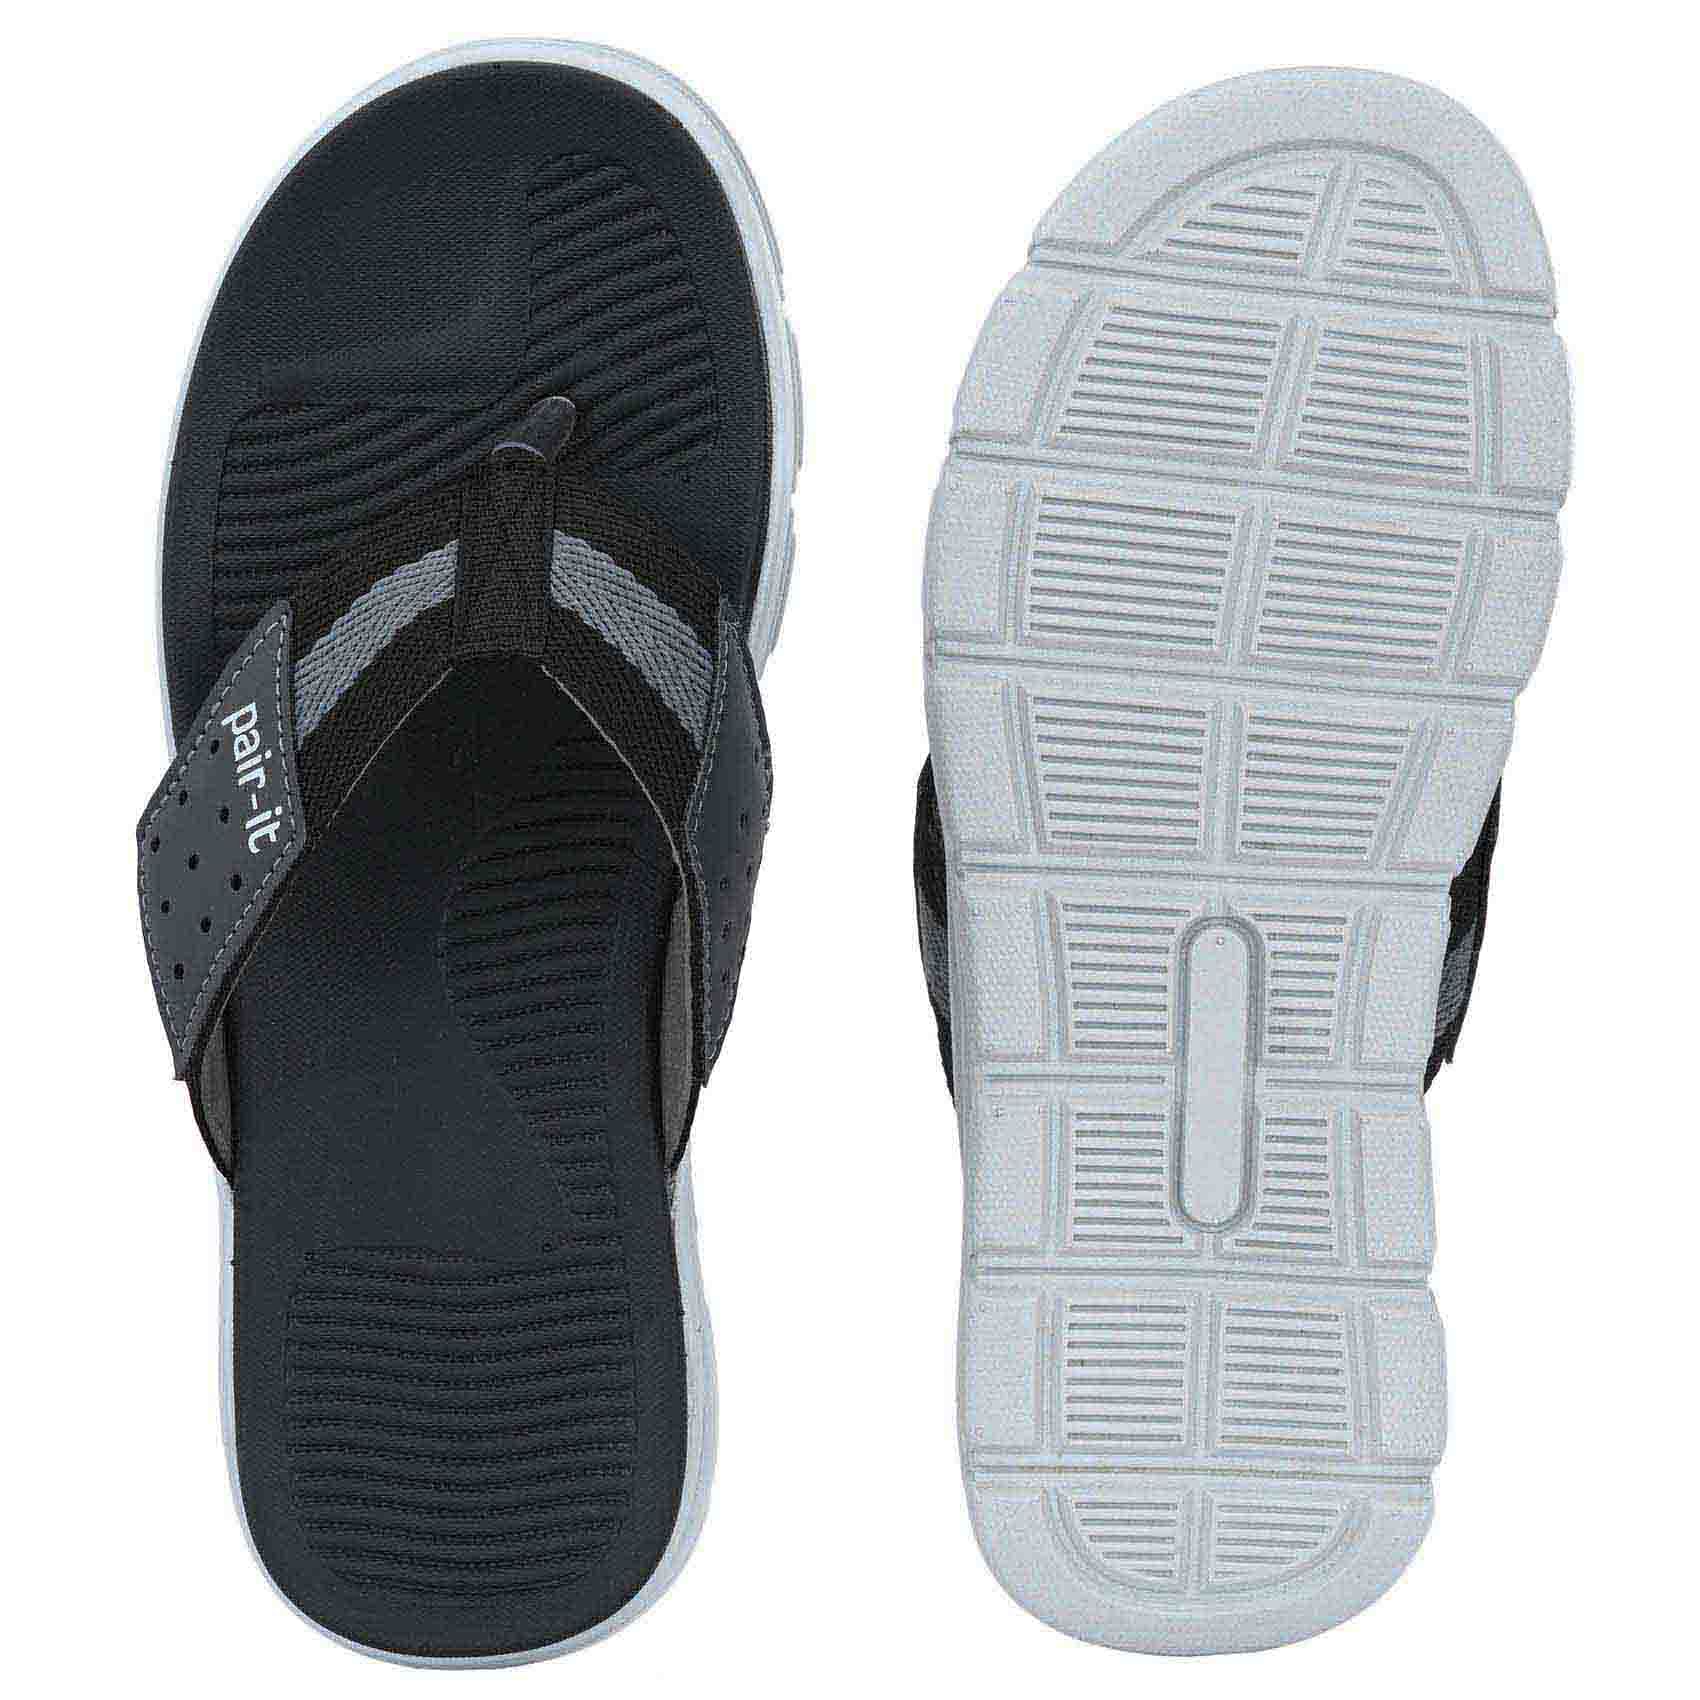 Pair-it Men's Rubberised EVA Slippers-LZ-Slippers117-Black/Grey